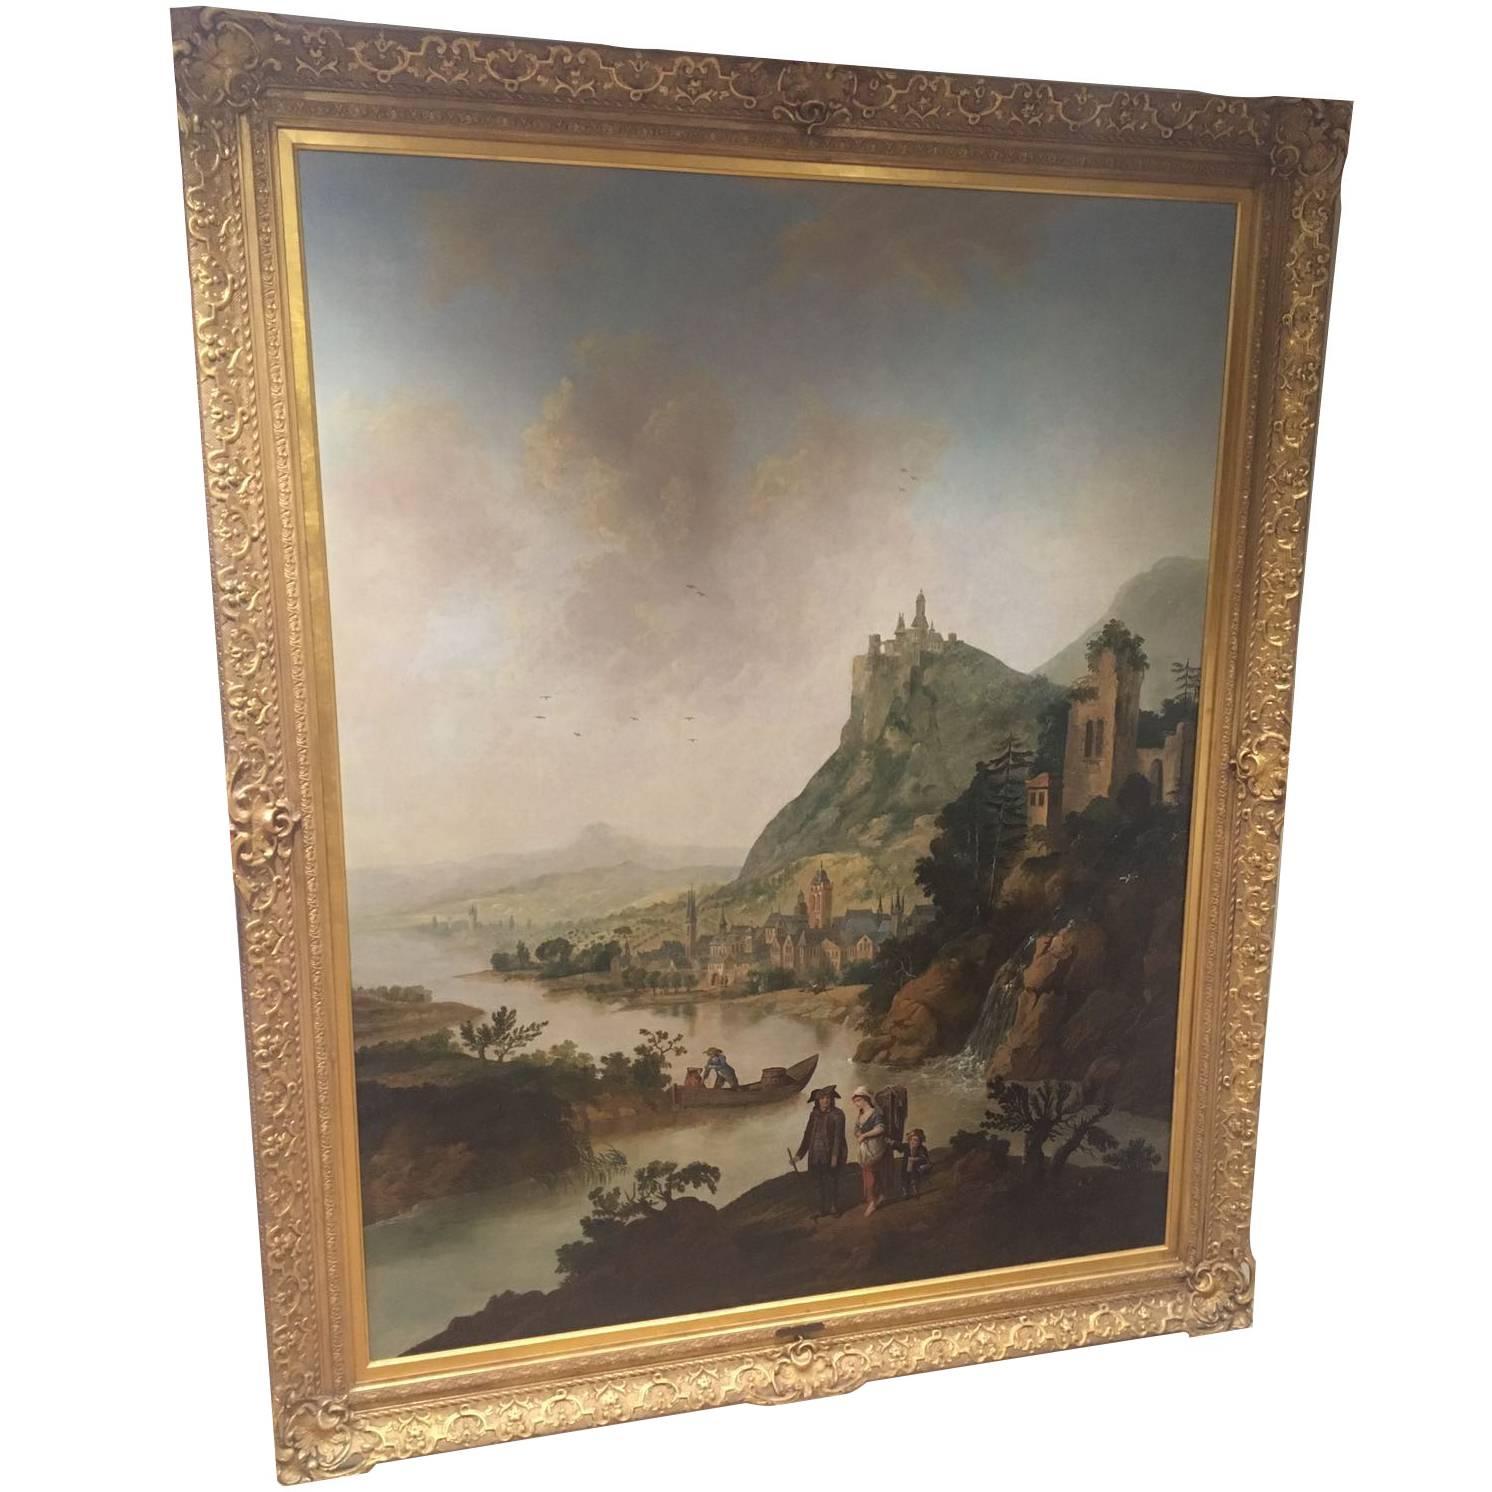 A Rare Large Oil Painting (H-187cm x W-156cm) by Christian Georg Schütz d.Ä. For Sale